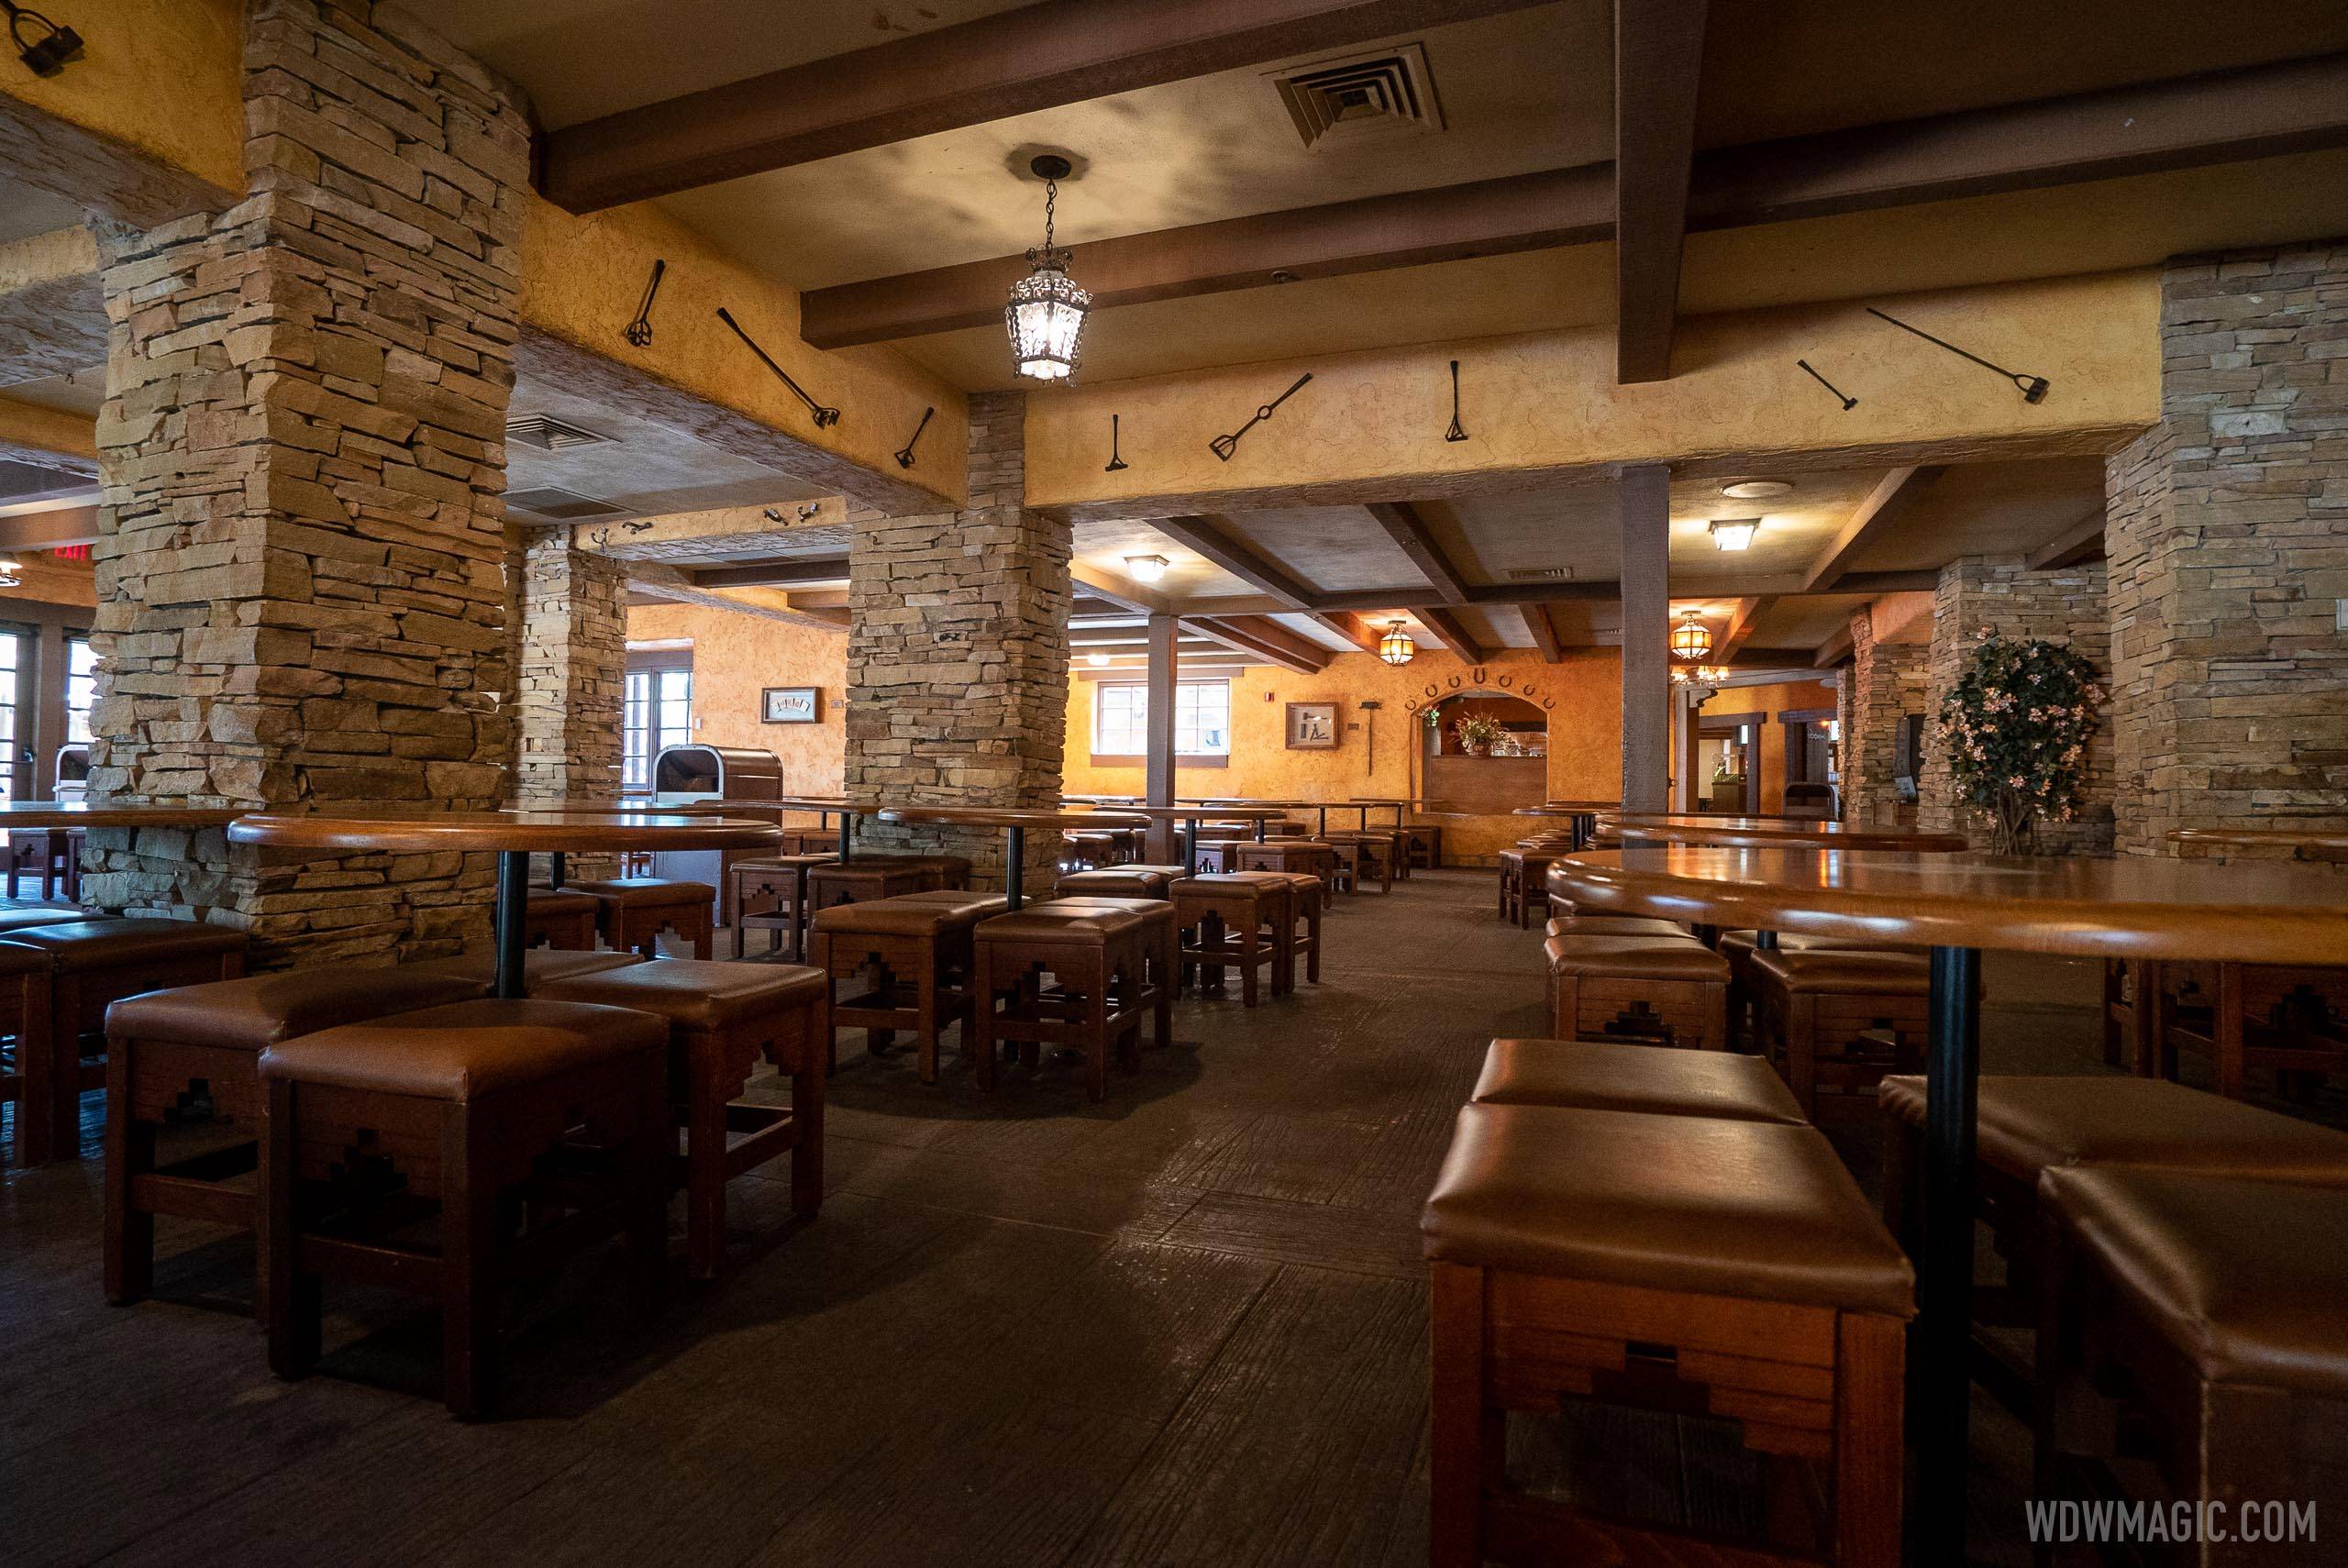 Pecos Bill Cafe closing for short refurbishment to launch new menu